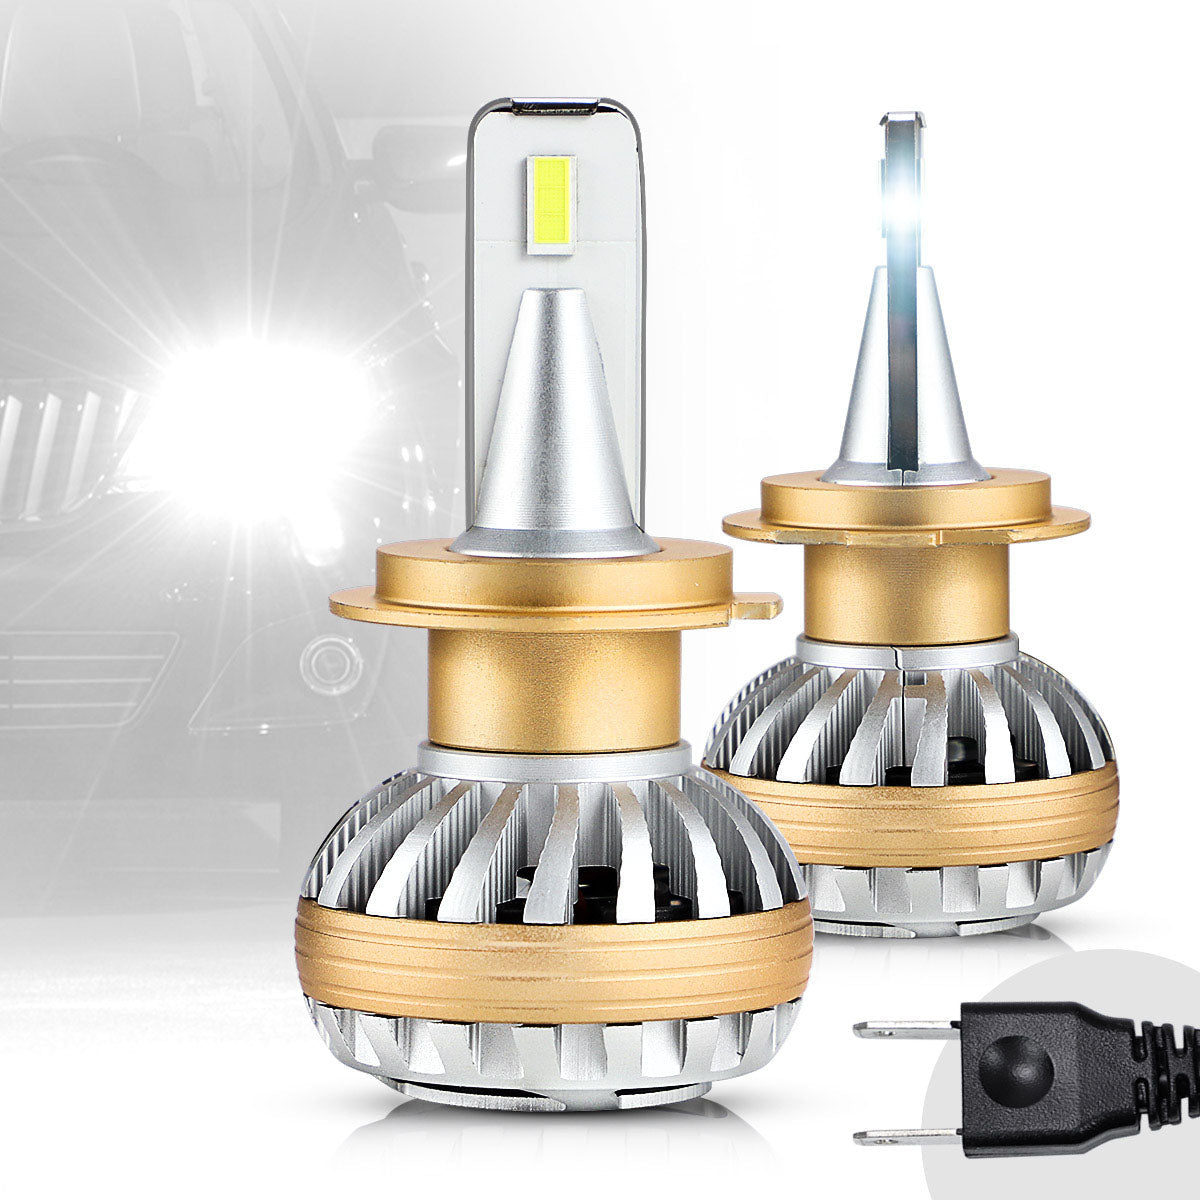 VLAND 2PCs D2S/H7/9005 LED Bulbs 6000K Fit for Headlights don't need Ballast BULBS H7 